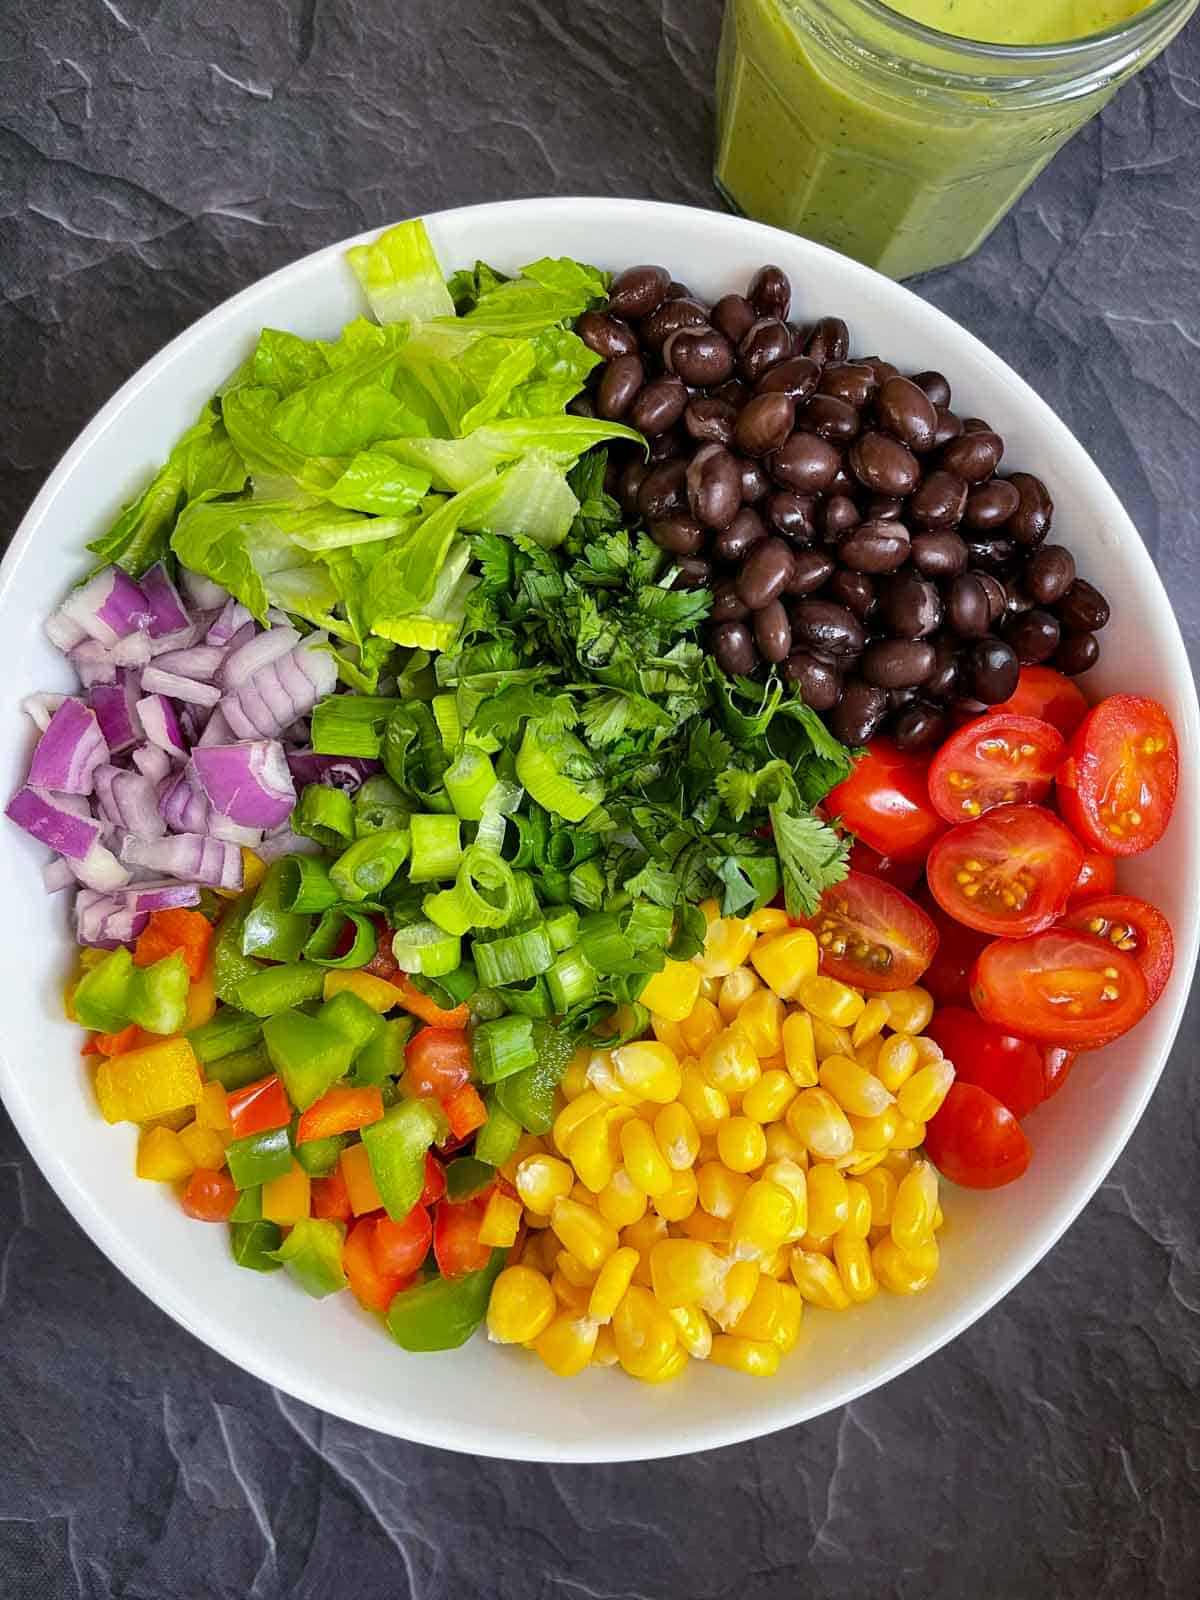 southwest salad ingredients in a bowl